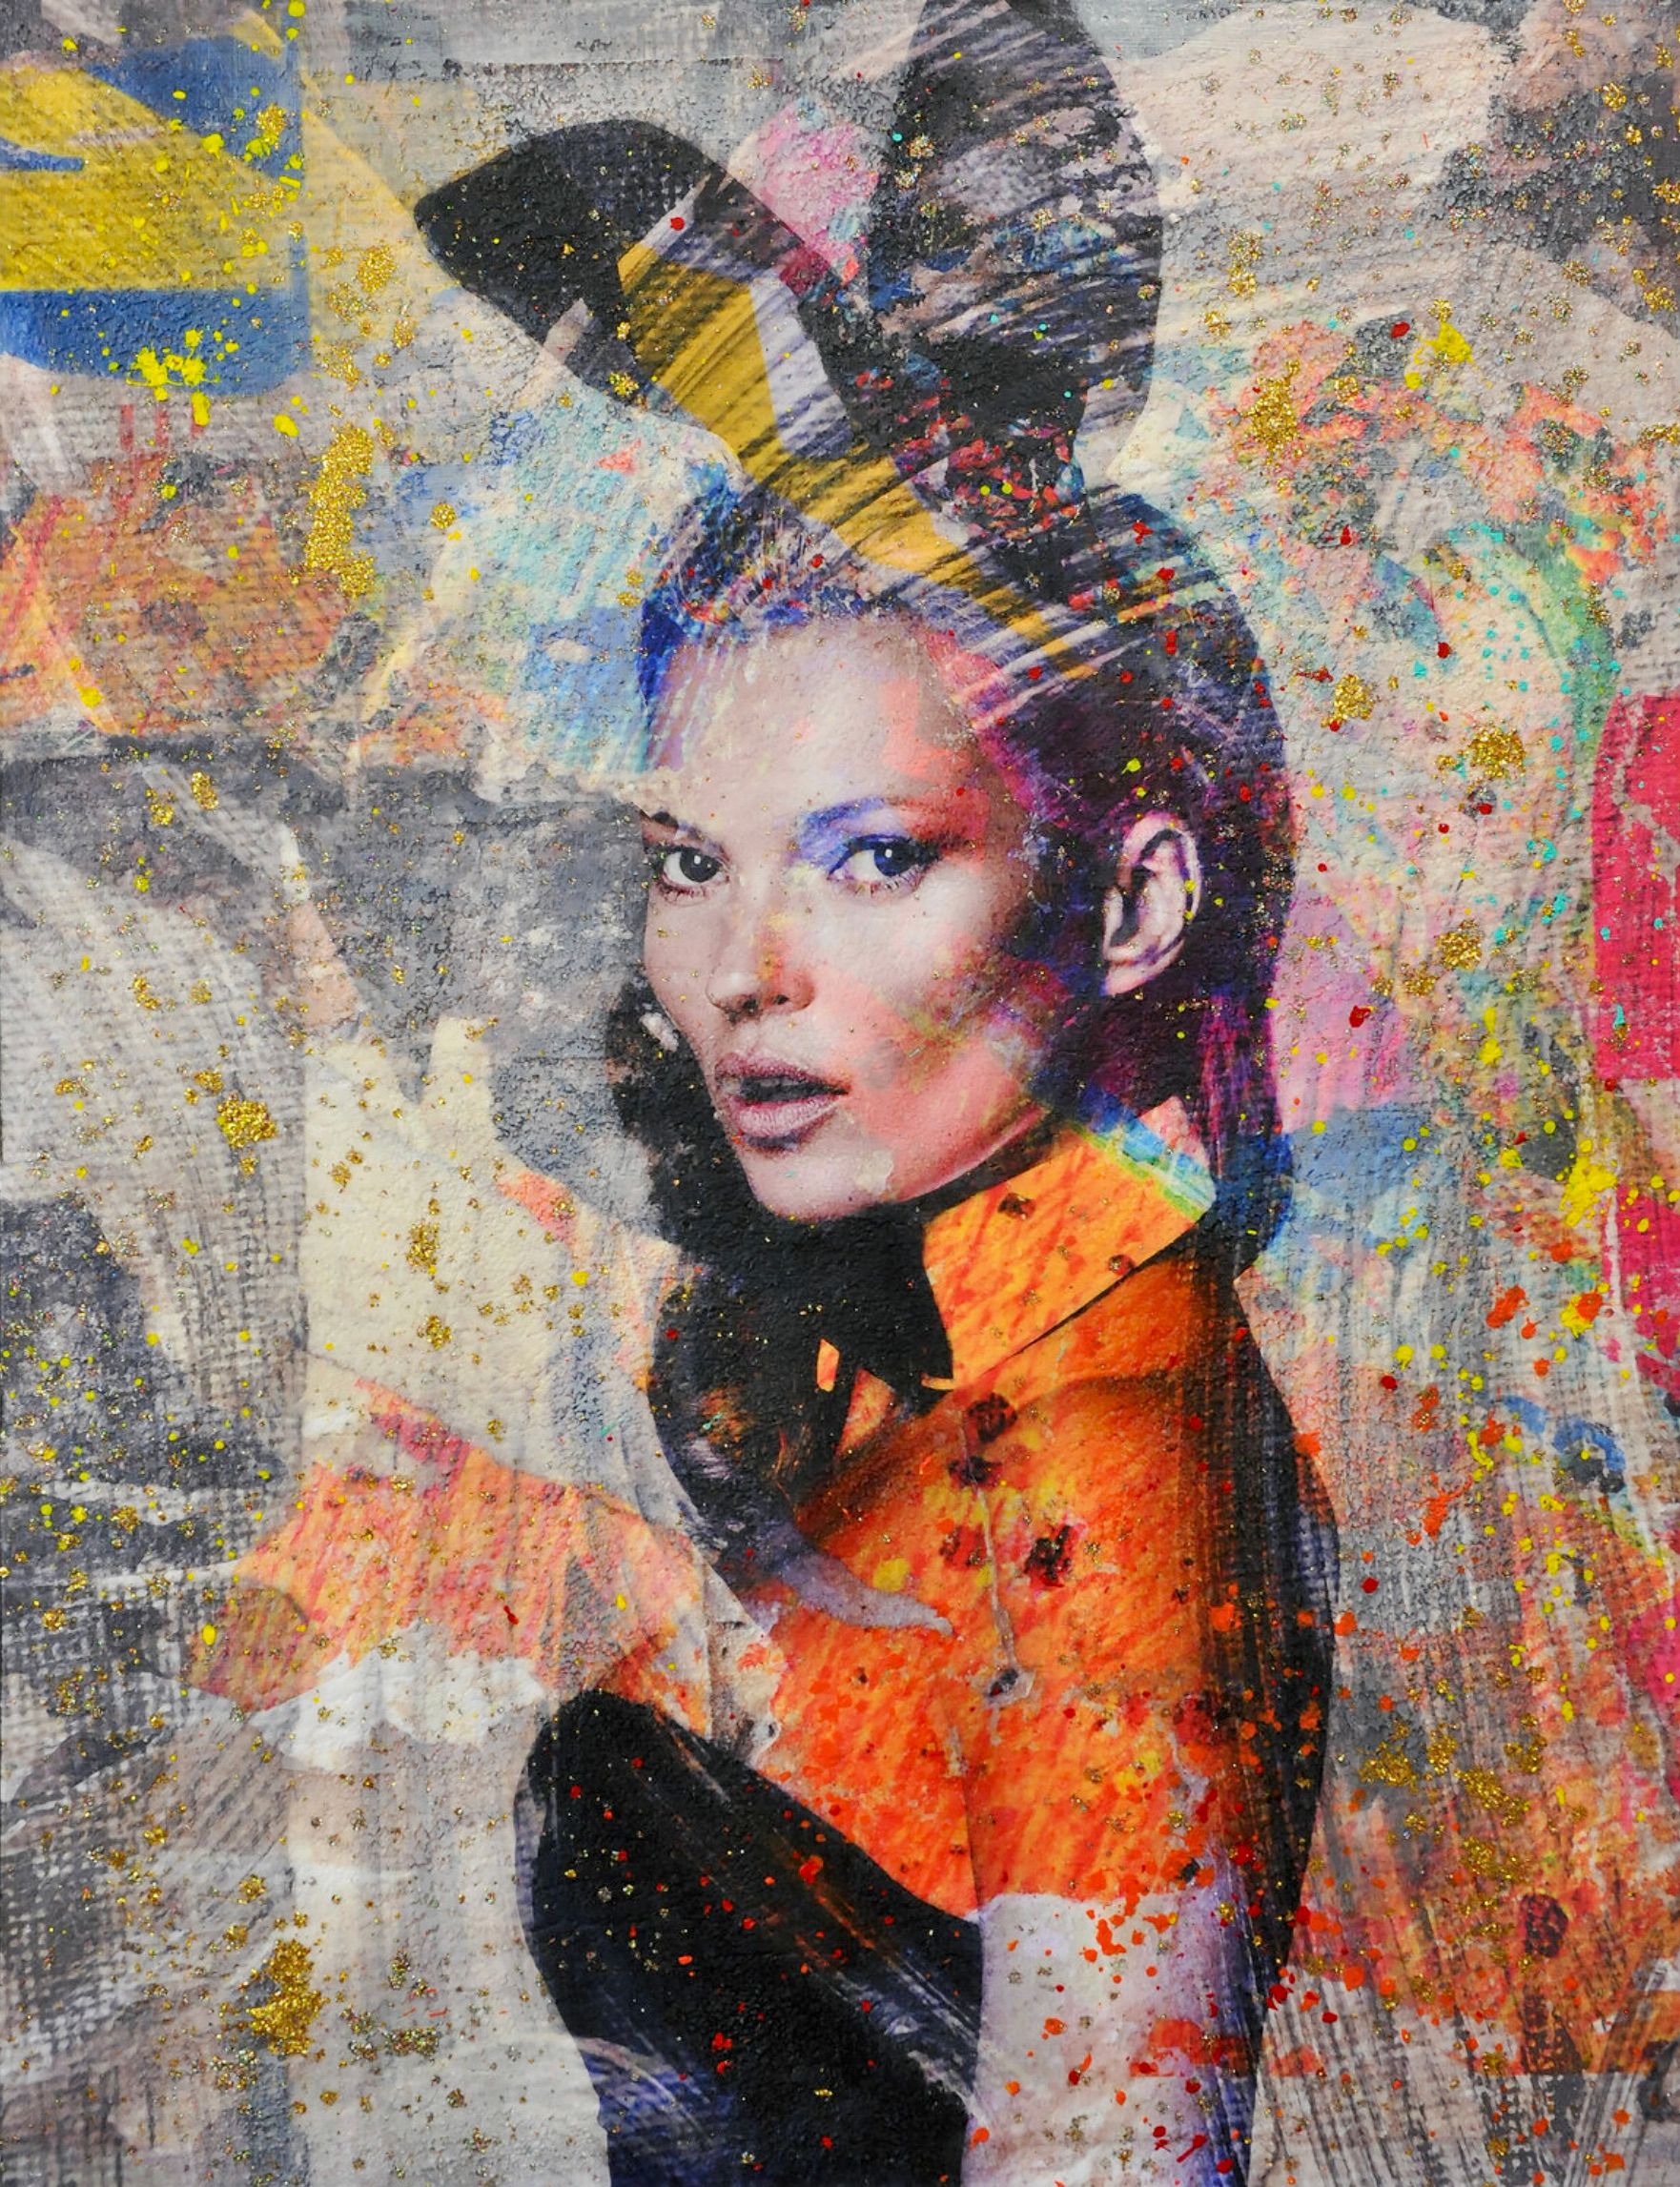 Bunny Kate" di Karin Vermeer è una combinazione ed elaborazione digitale di fotografie, dipinti e collage in nuove opere originali di street art a colori.